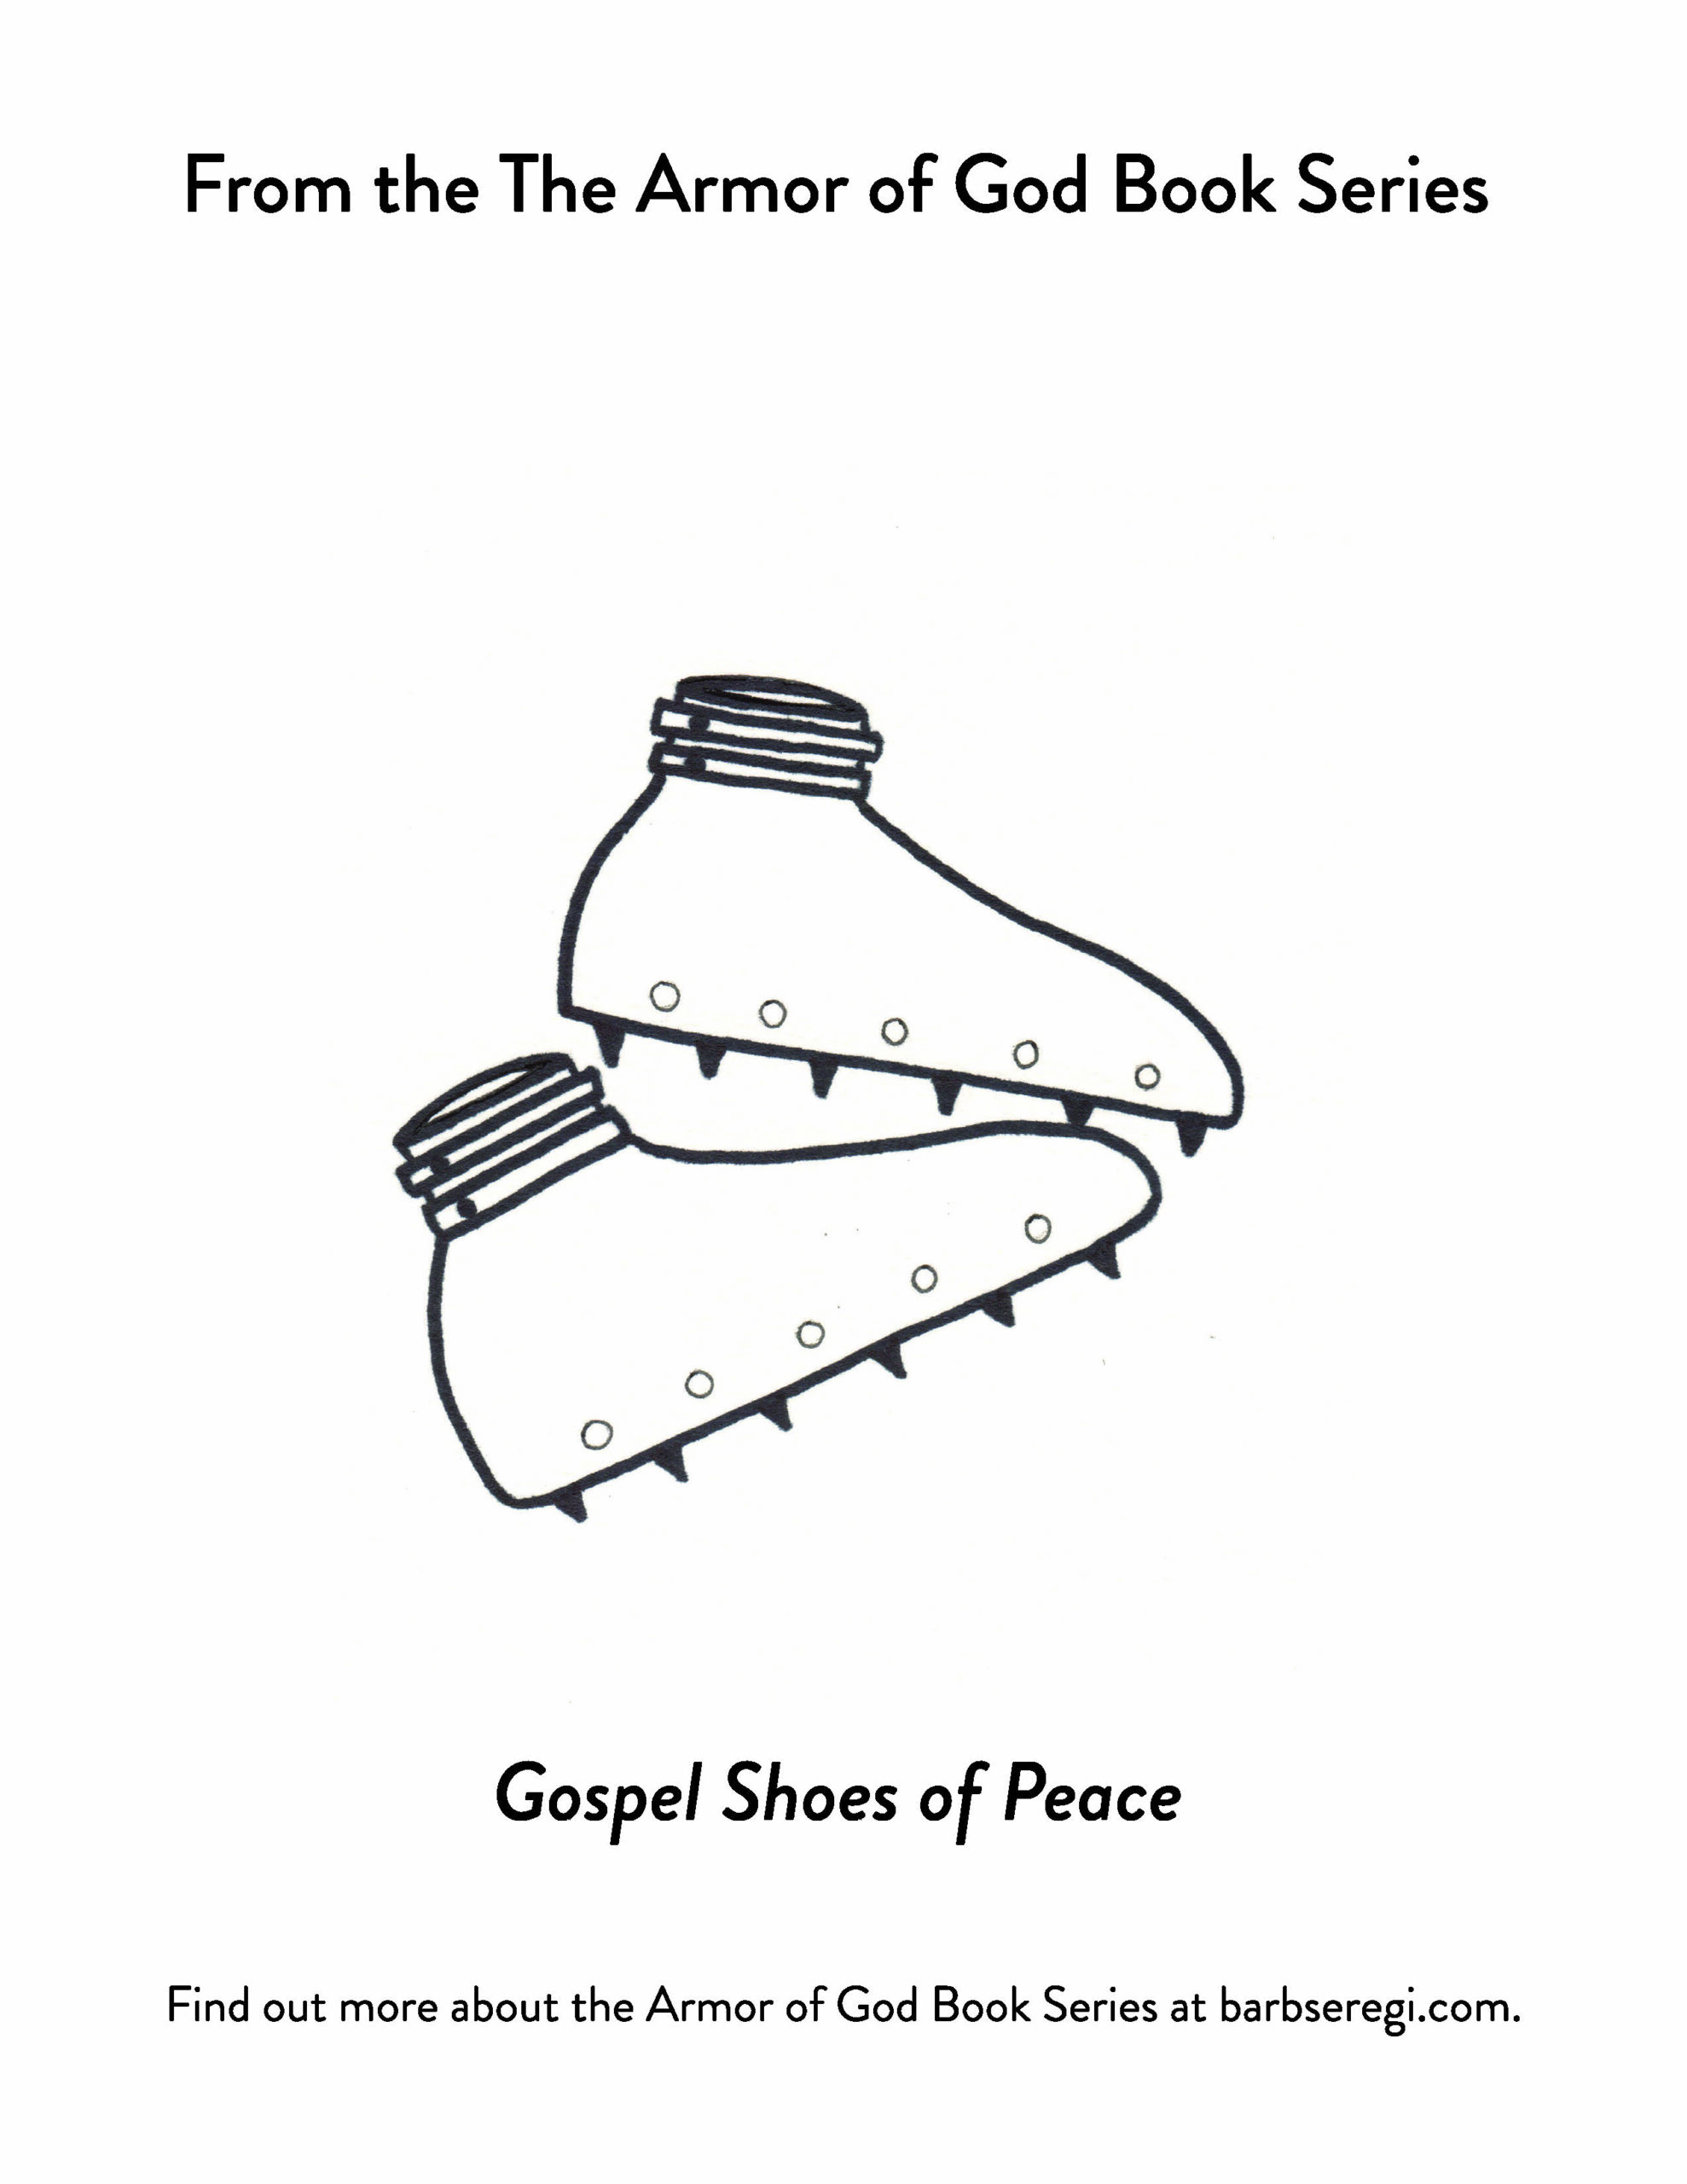 Gospel Shoes of Peace